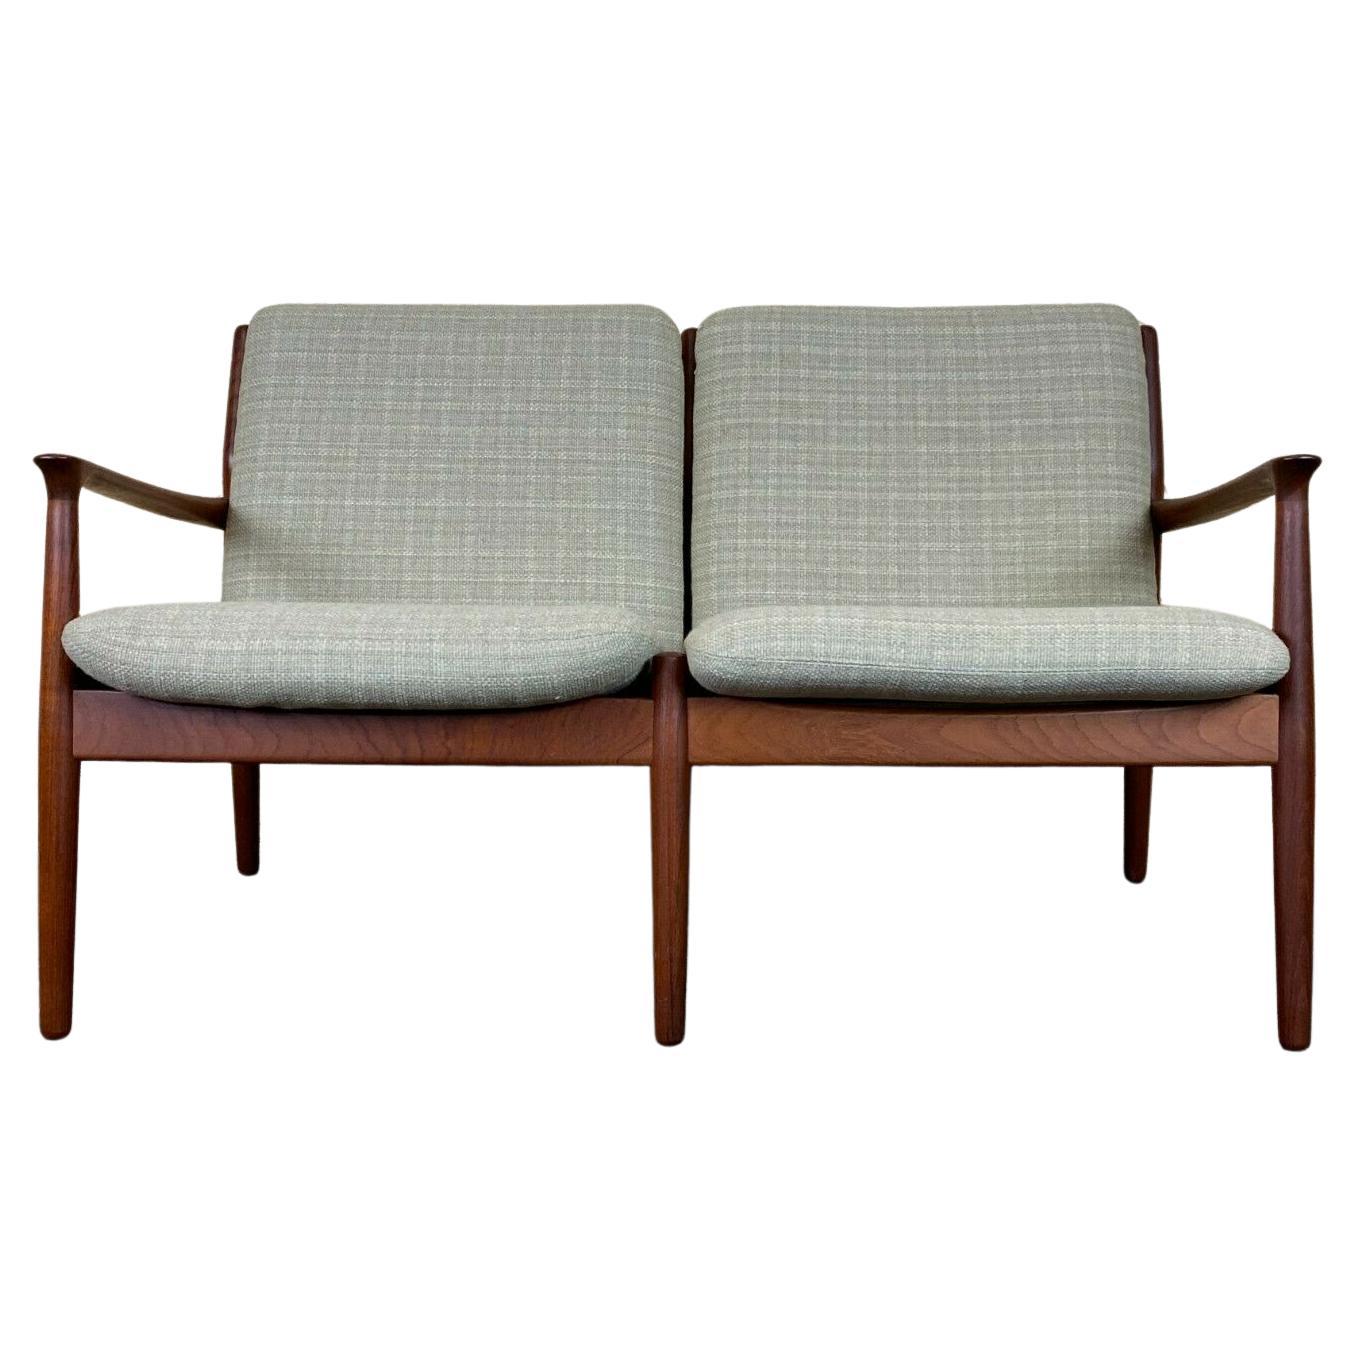 60s 70s Teak Sofa Couch 2er Svend Aage Eriksen for Glostrup Danish Design